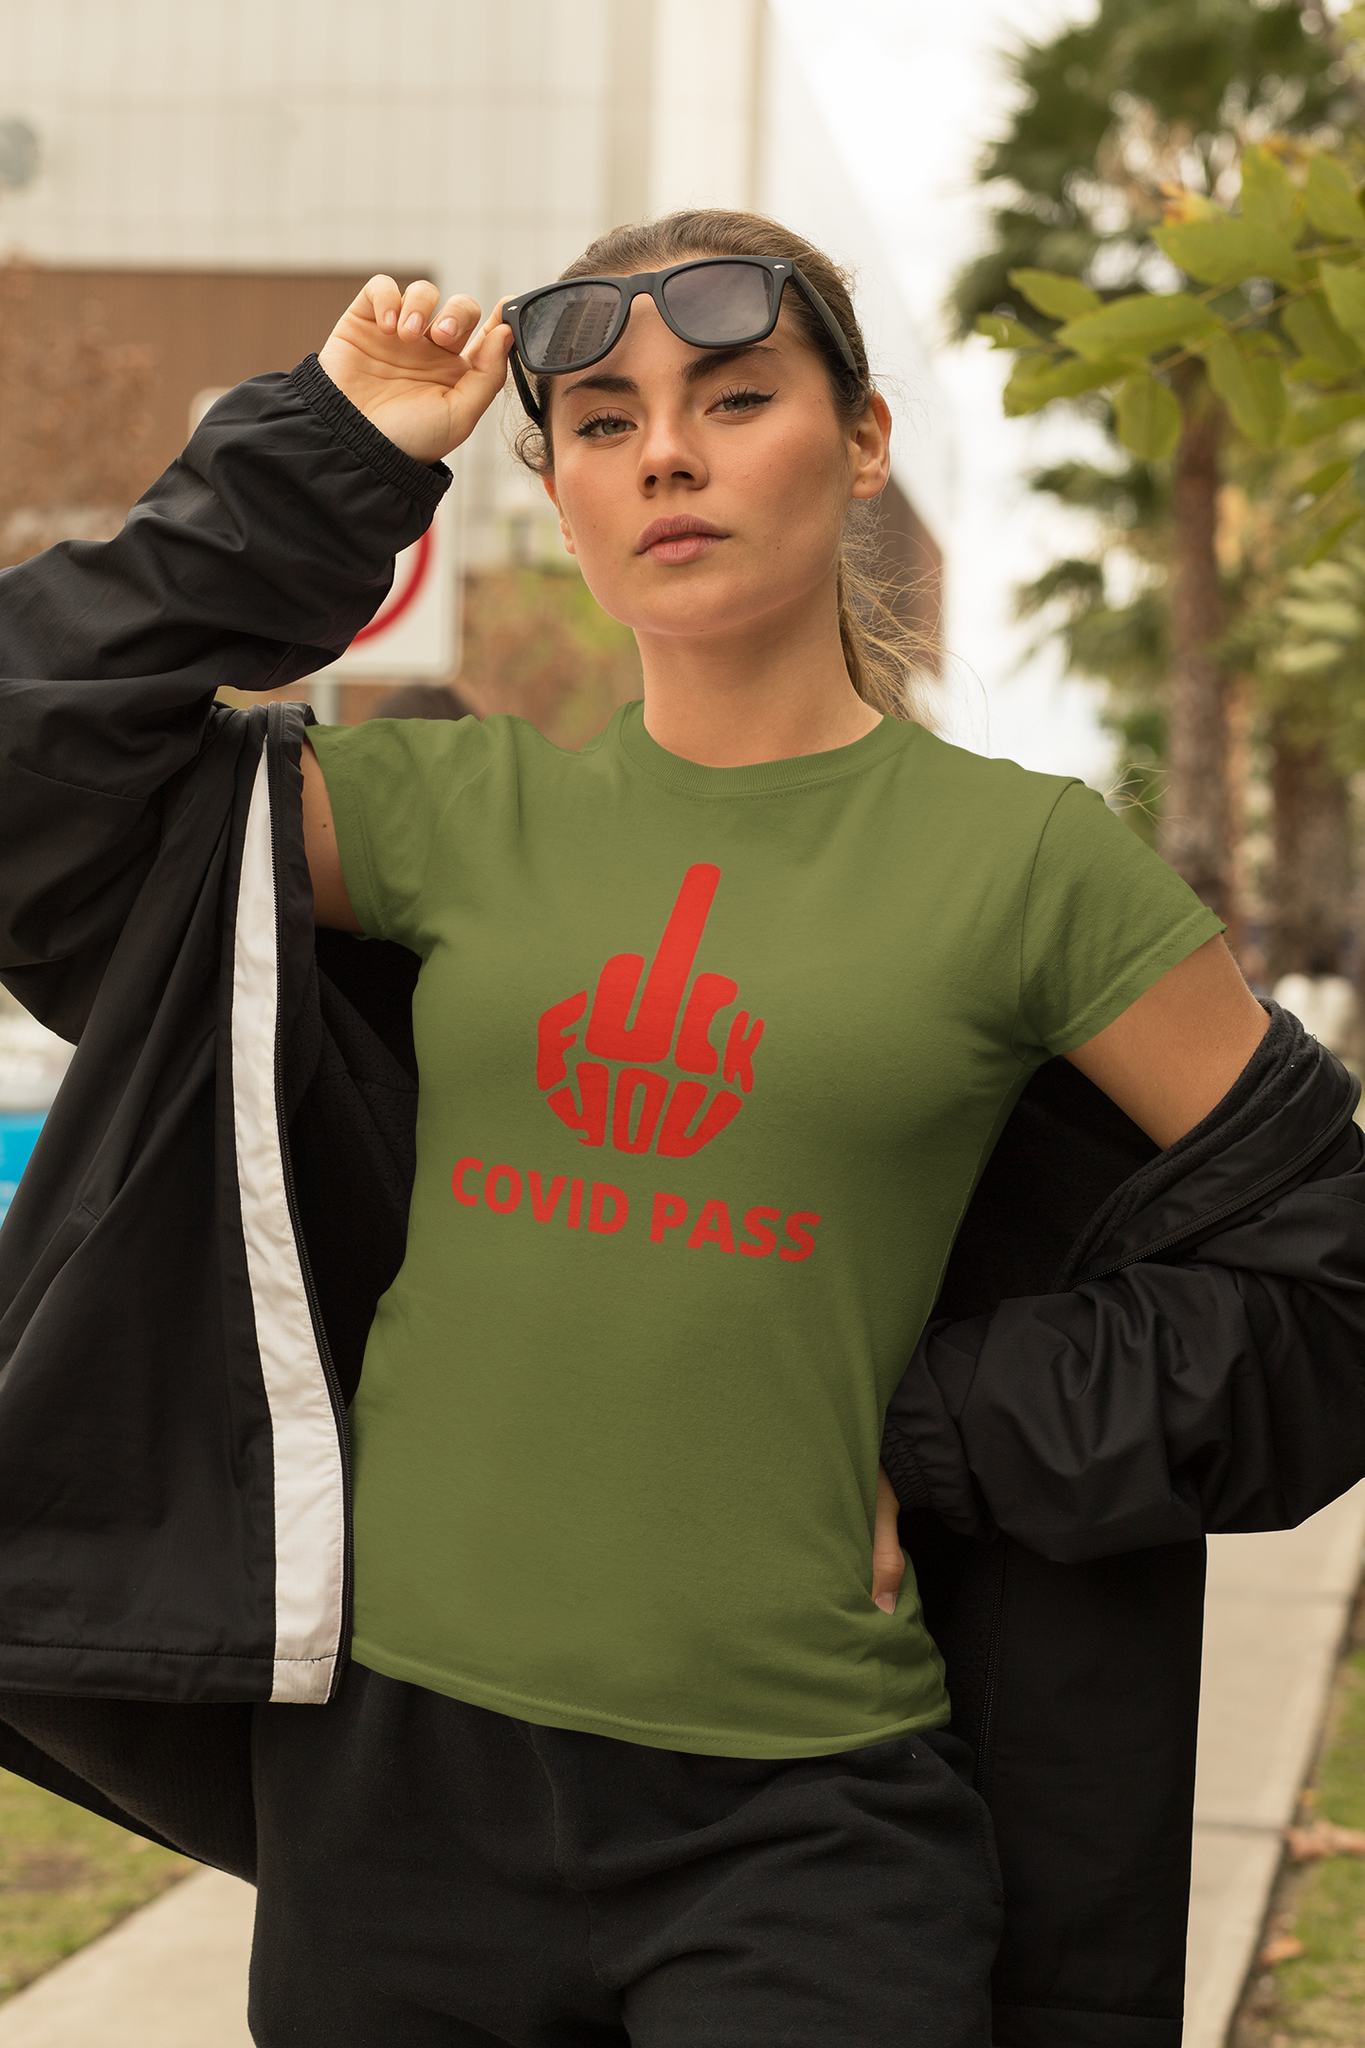 Covid Pass T-Shirt Women